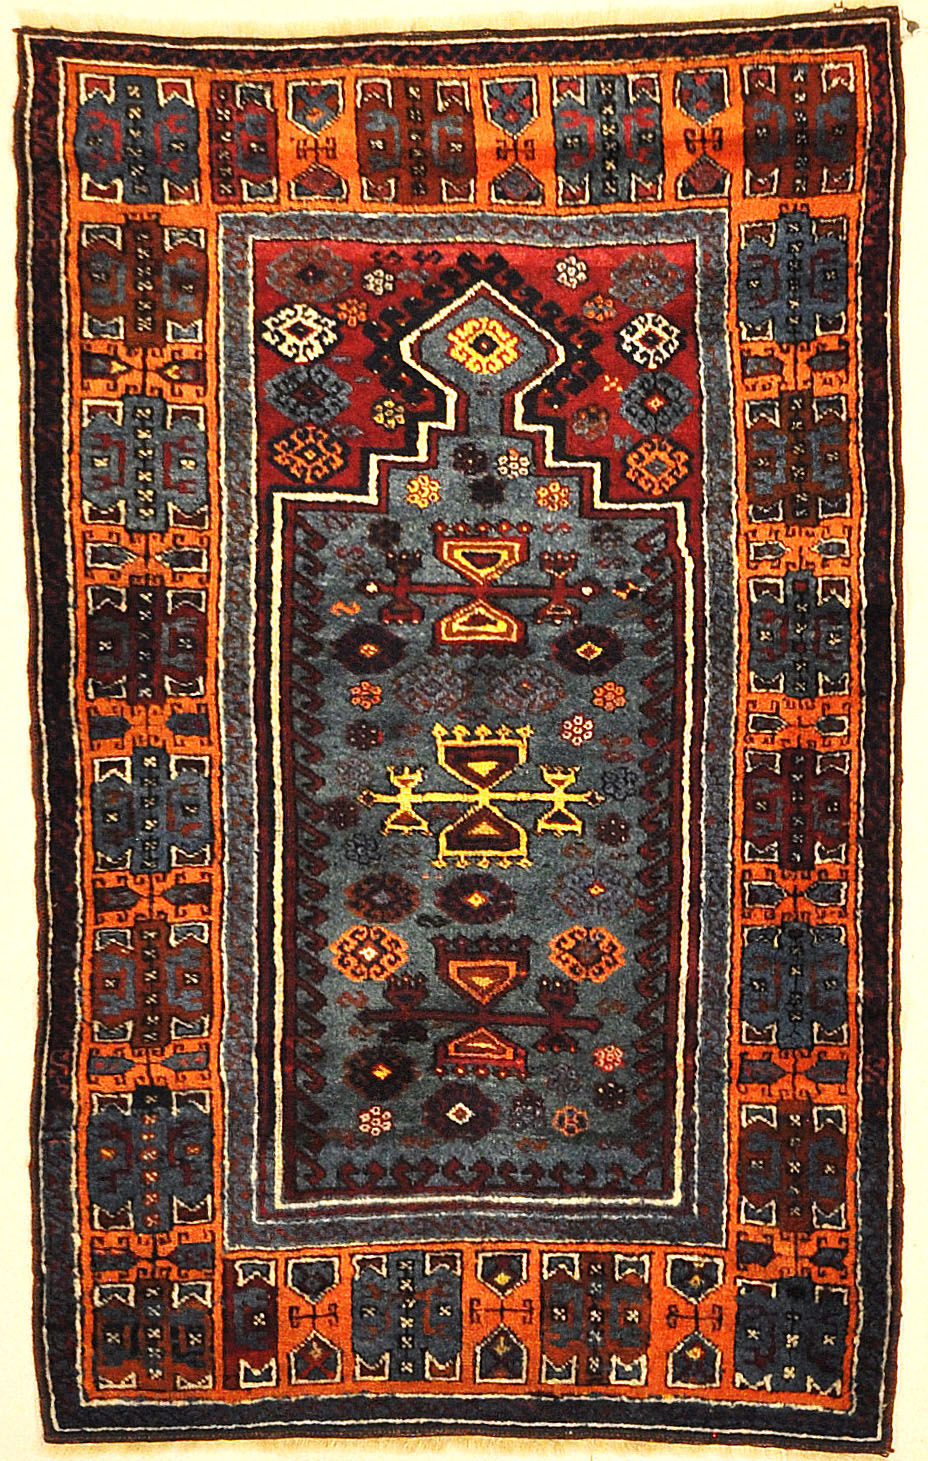 Antique Turkish Yuruk Rare Prayer Rug. A genuine authentic piece of woven carpet art sold at Santa Barbara Design Center Rugs and More.